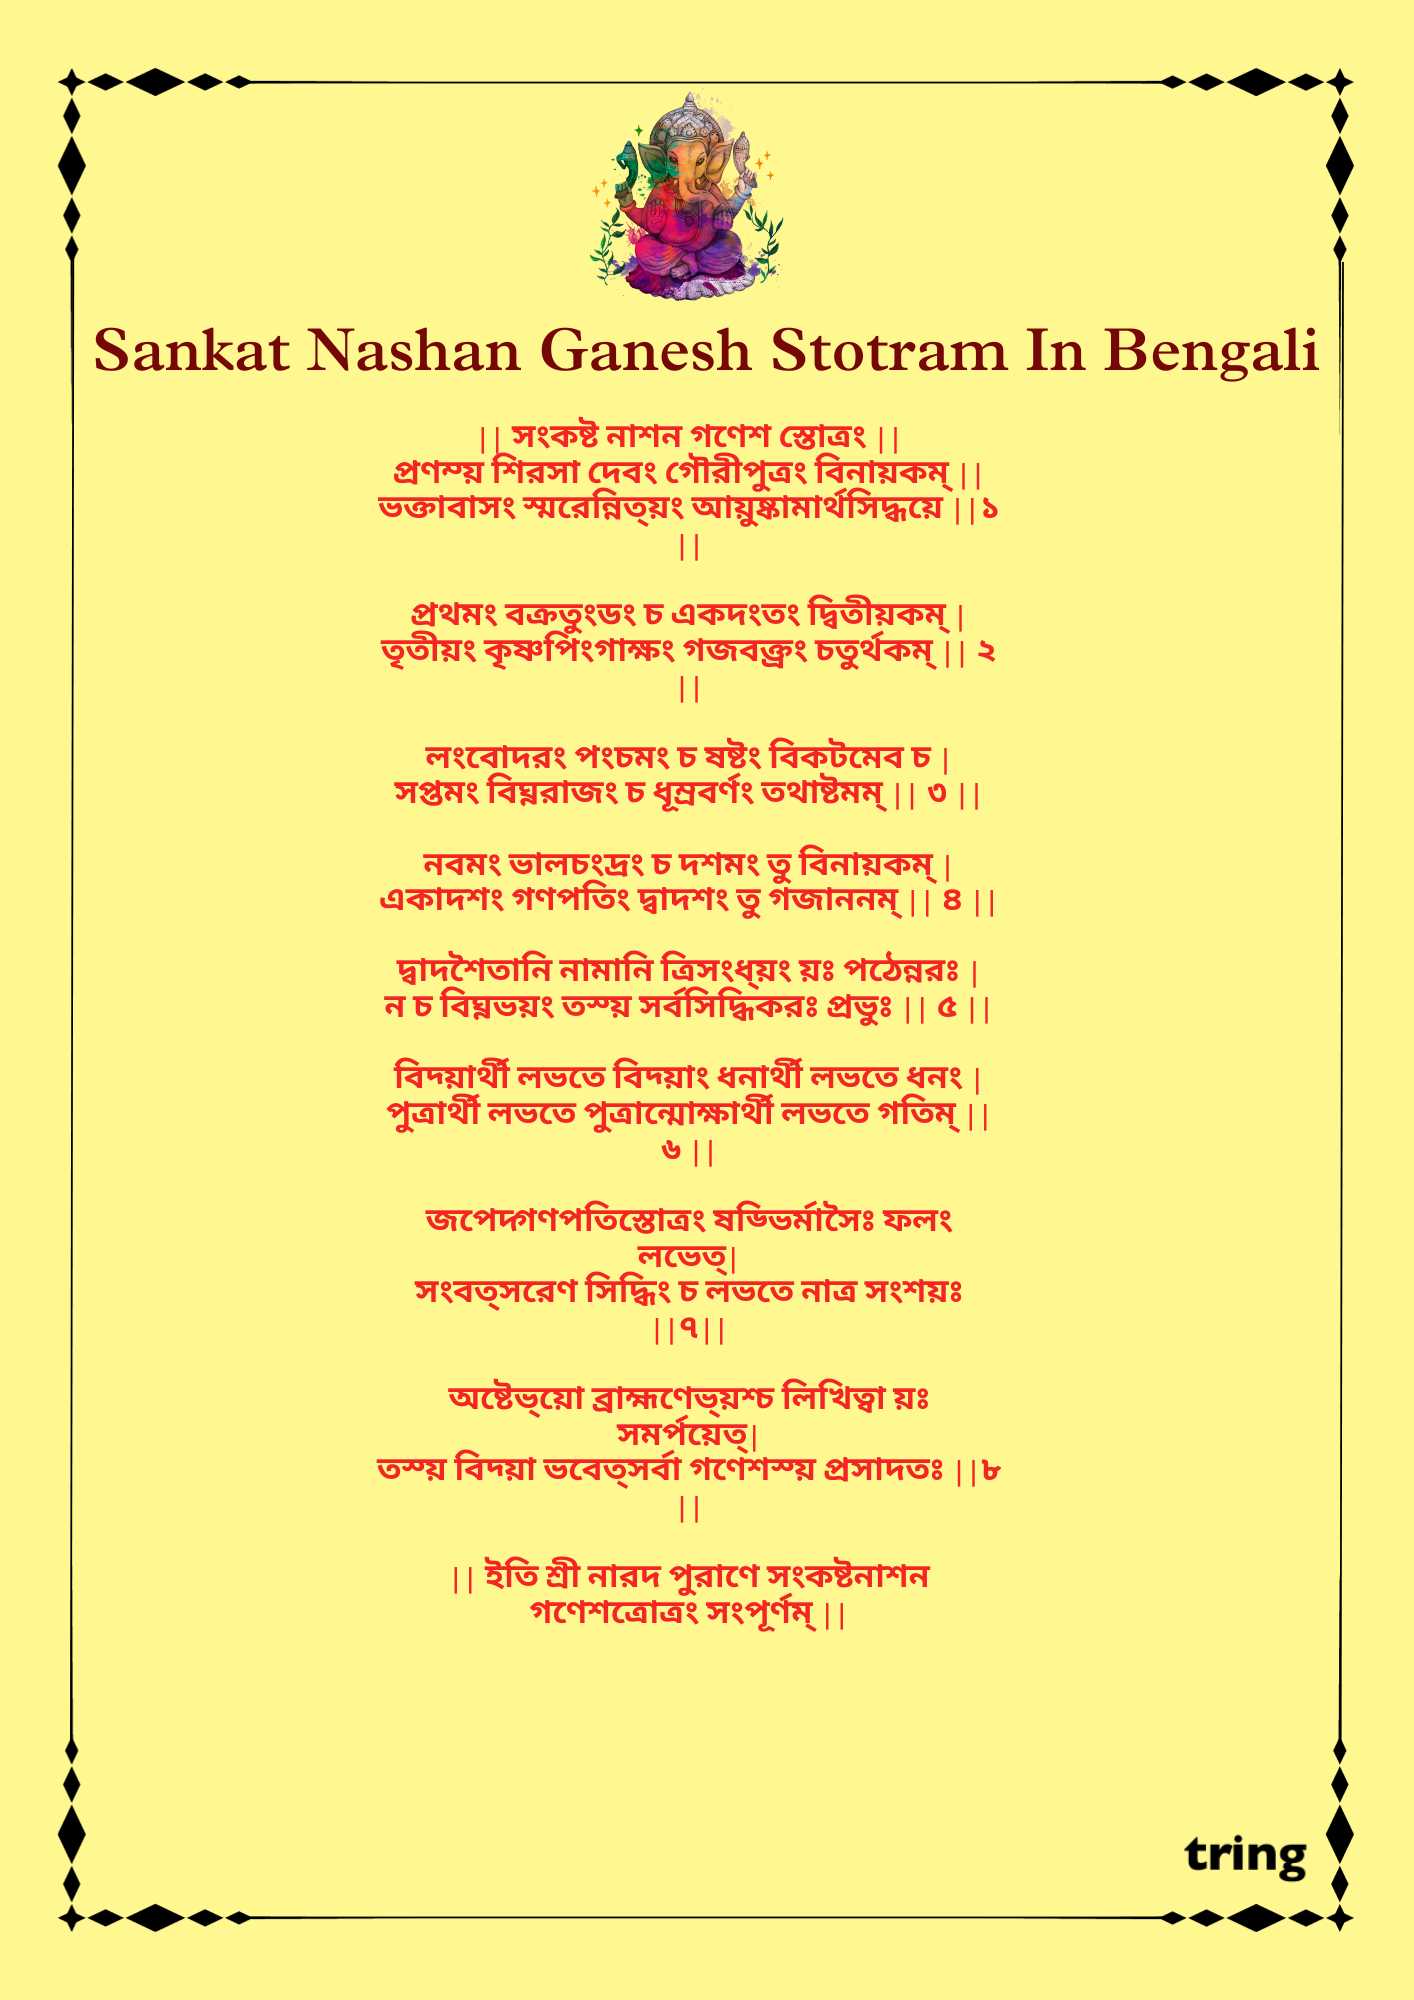 Sankat Nashan Ganesh Stotram Images (2)